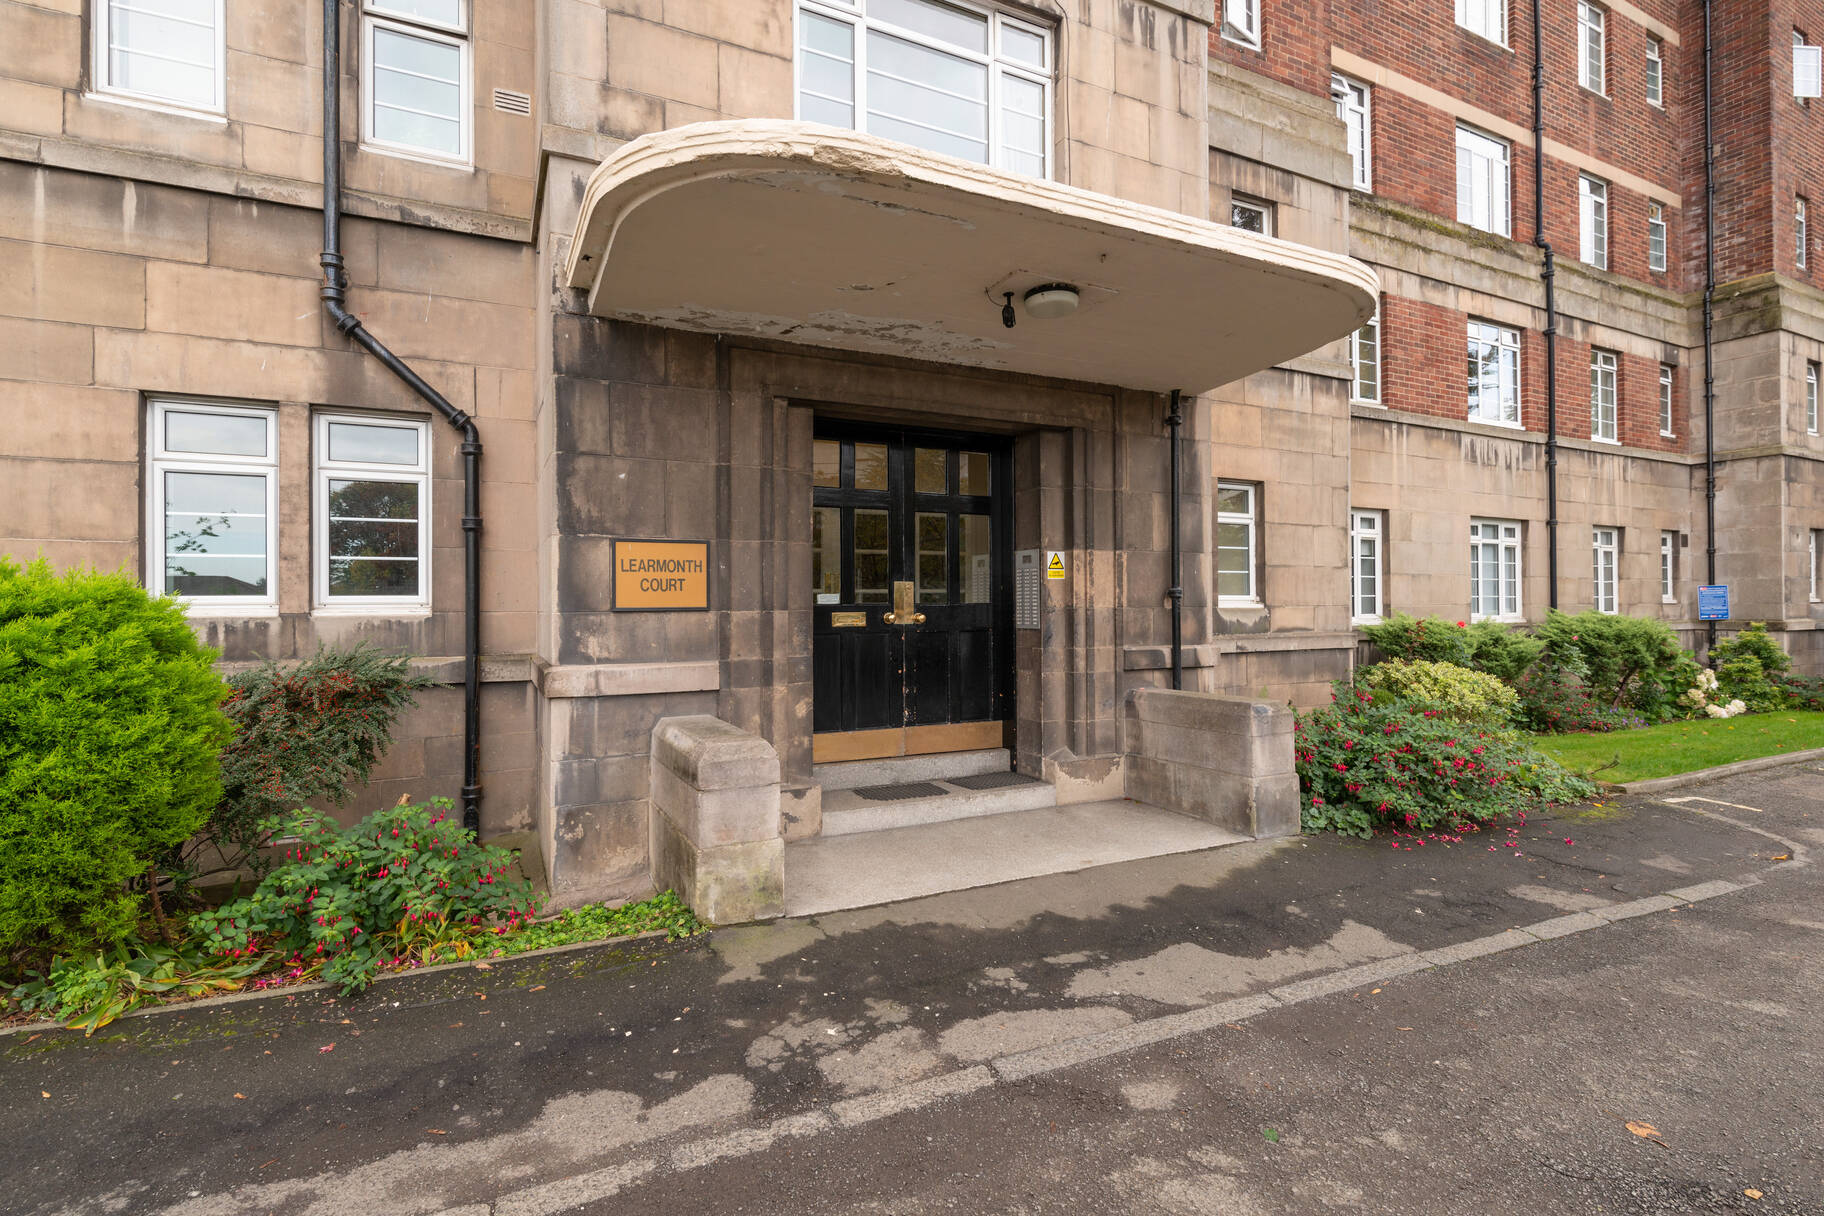 38 Learmonth Court, Comely Bank, Edinburgh, EH4 1PB